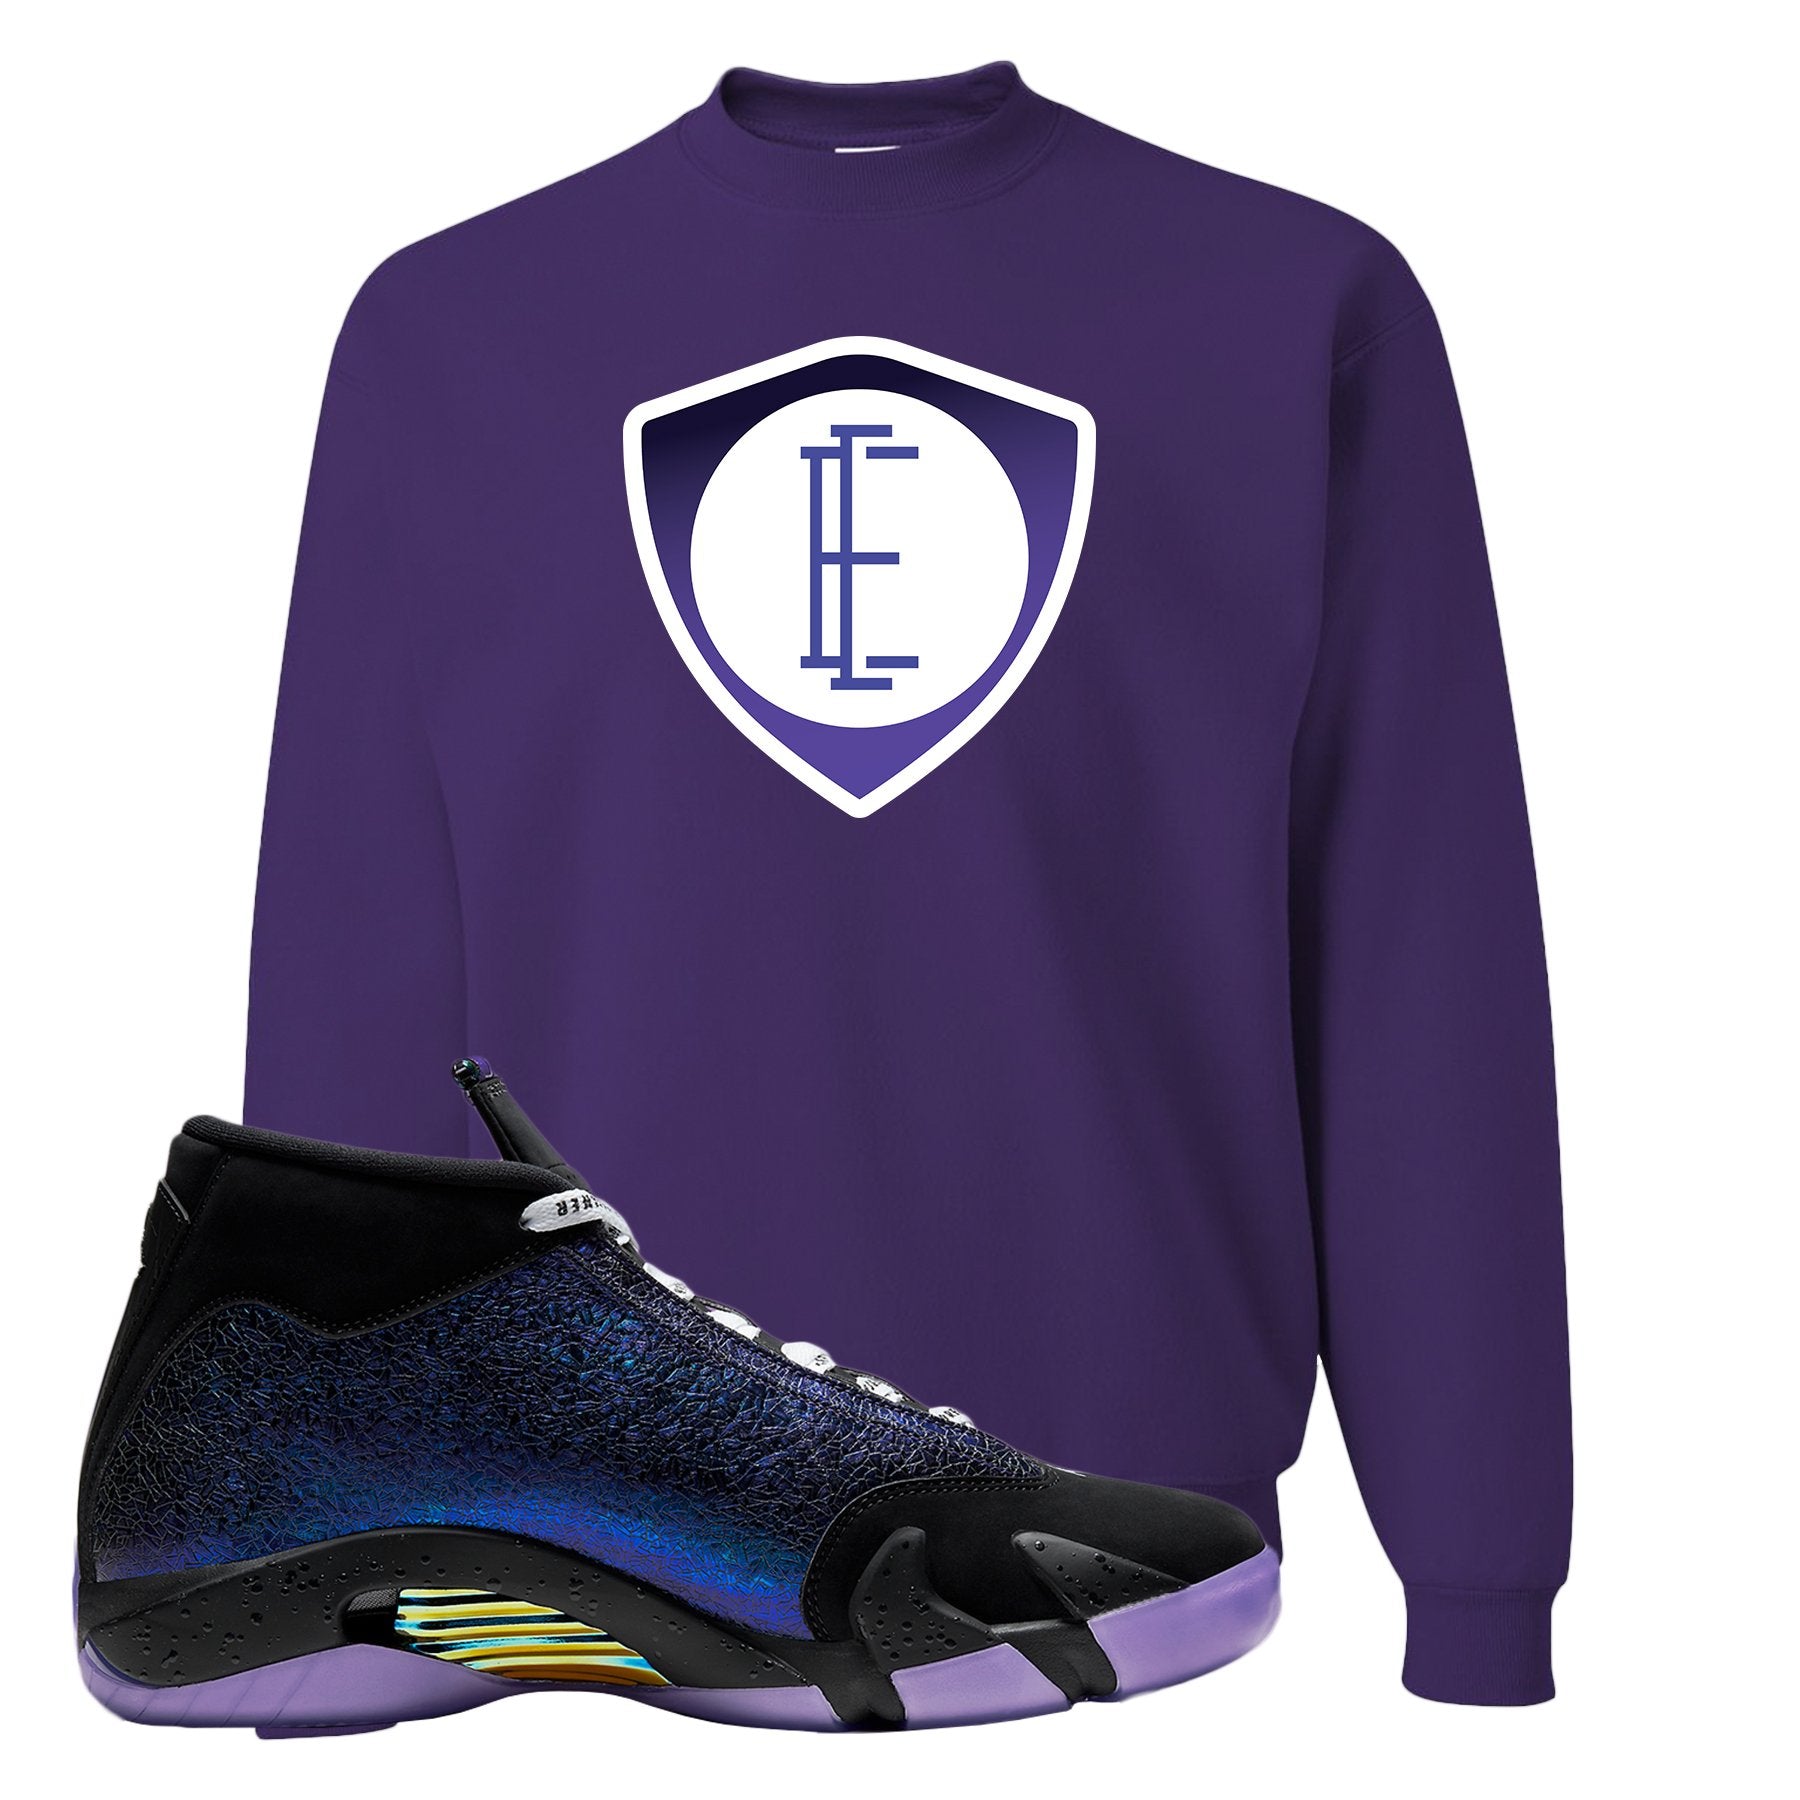 Doernbecher 14s Crewneck Sweatshirt | E Shield, Purple